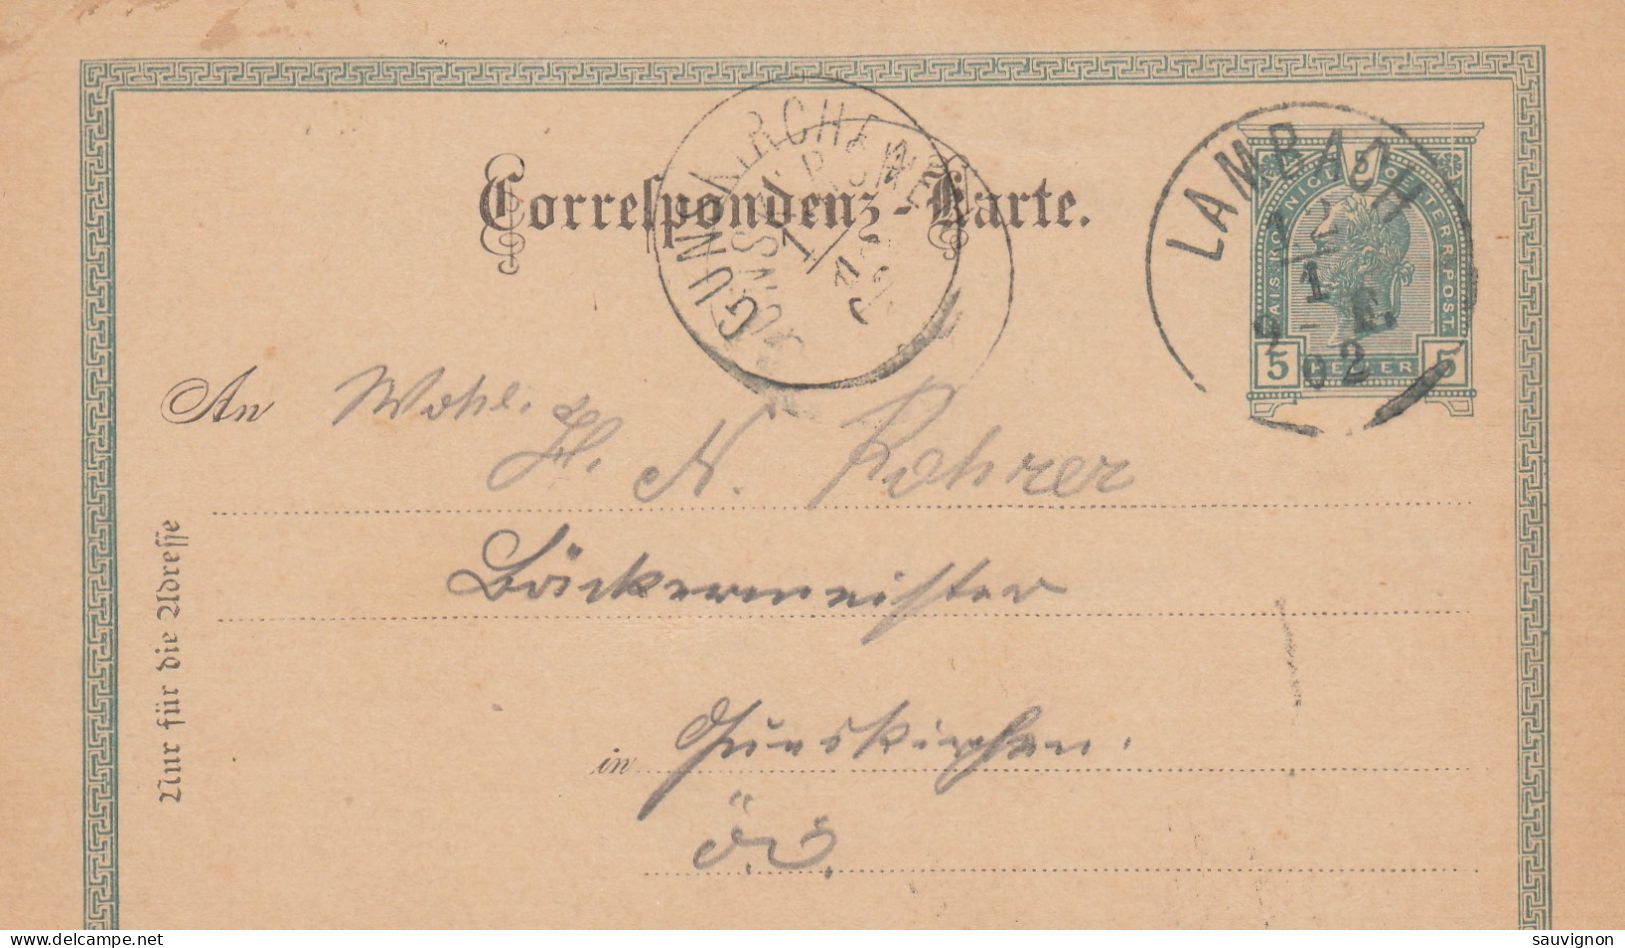 LAMBACH. 3 Postkarten (Ganzsachen) Mit Verschiedenen Lambach-Abstempelungen 1895-1903 - Postcards